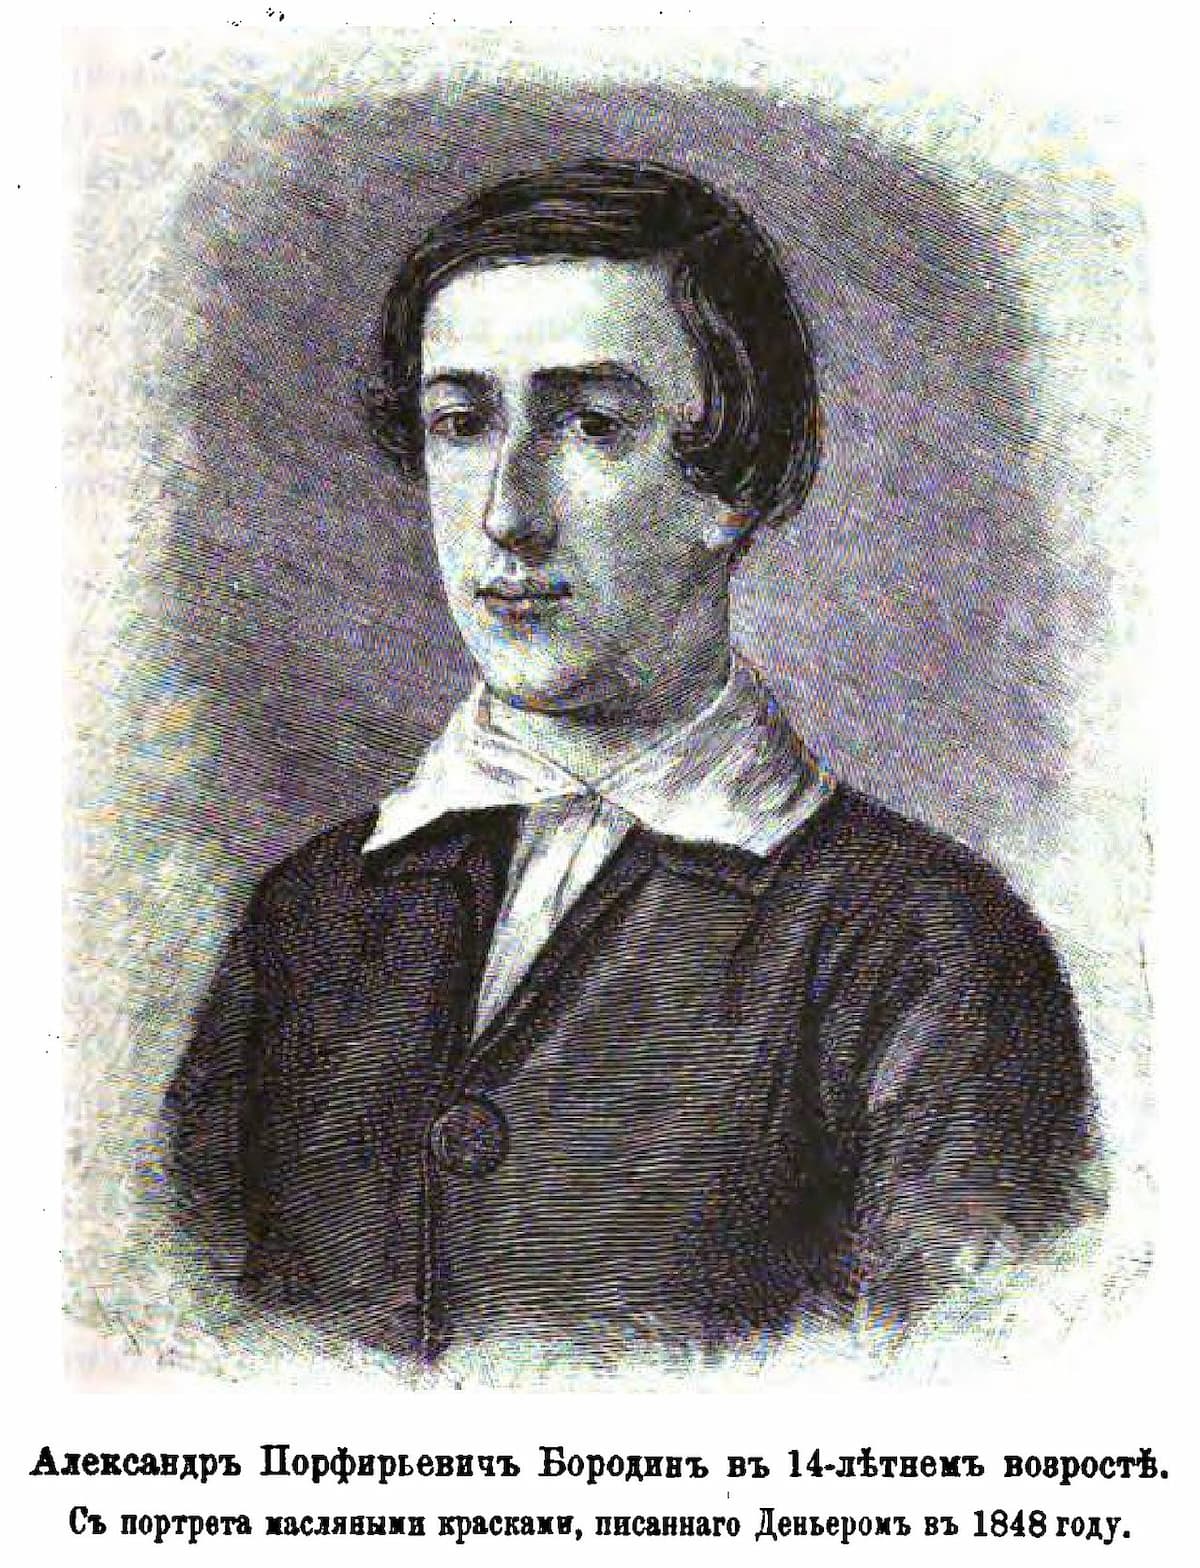 Alexander Borodin at age 14